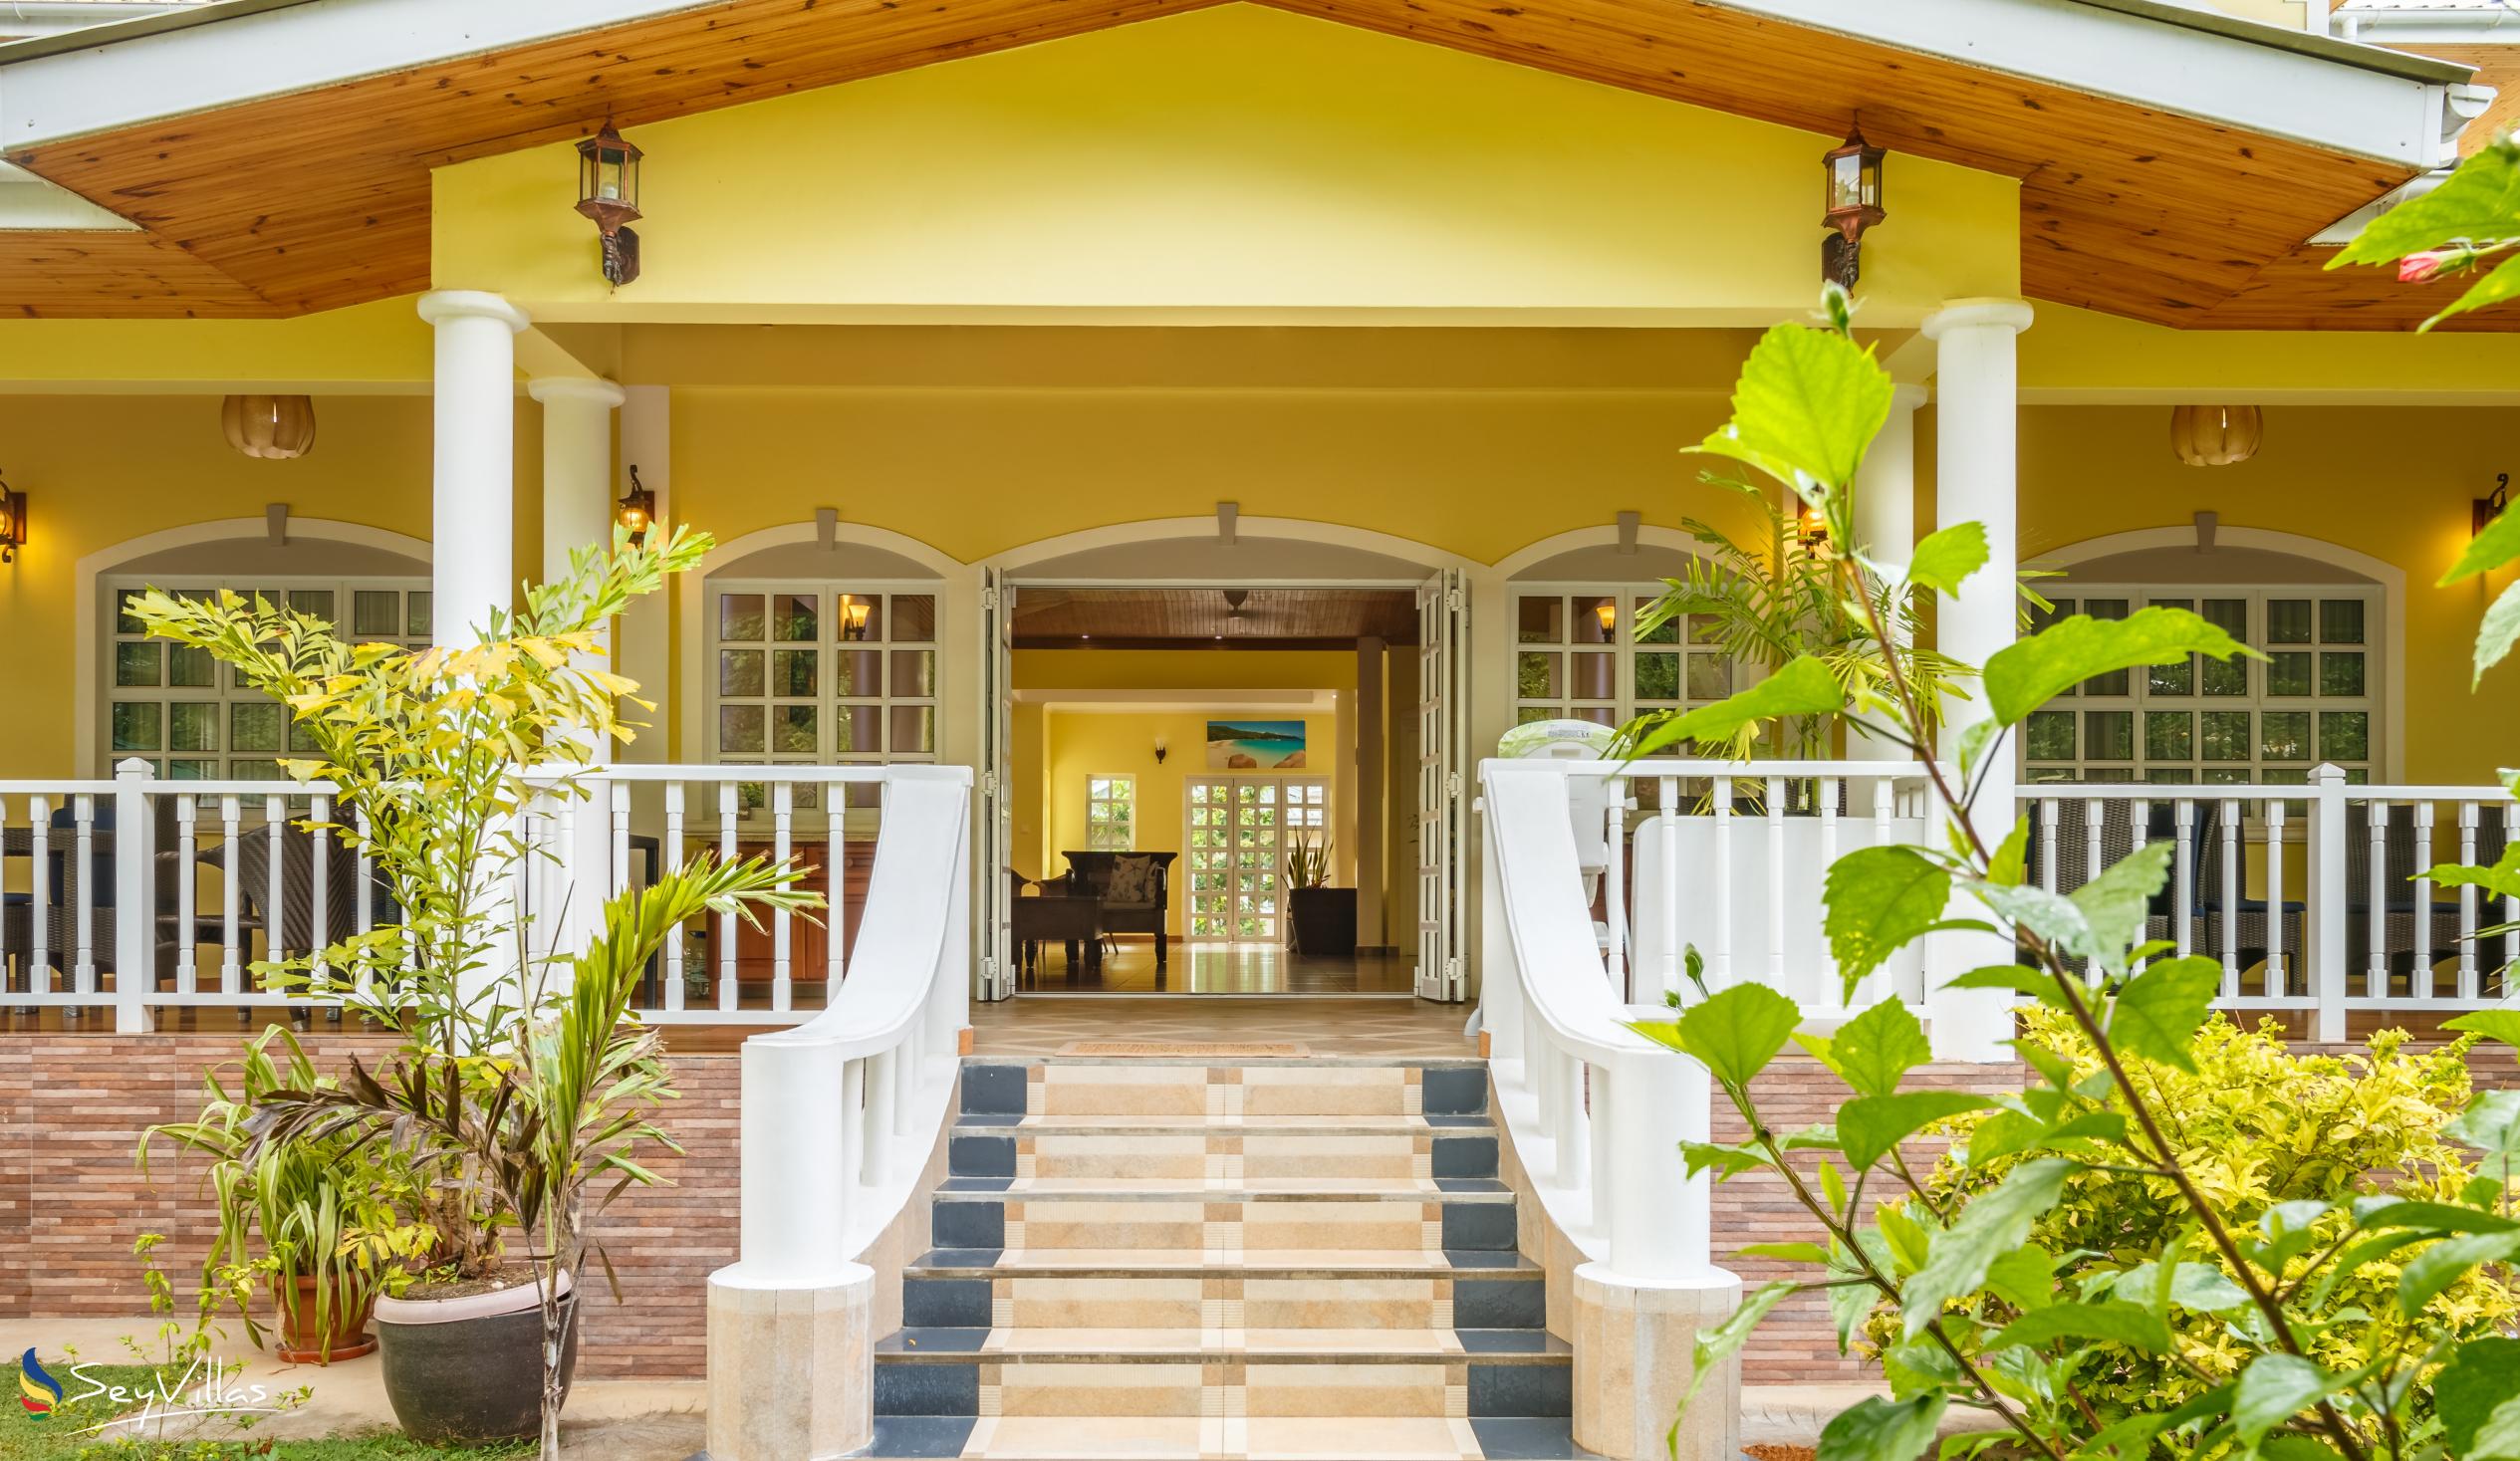 Photo 3: Captain's Villa - Outdoor area - Mahé (Seychelles)